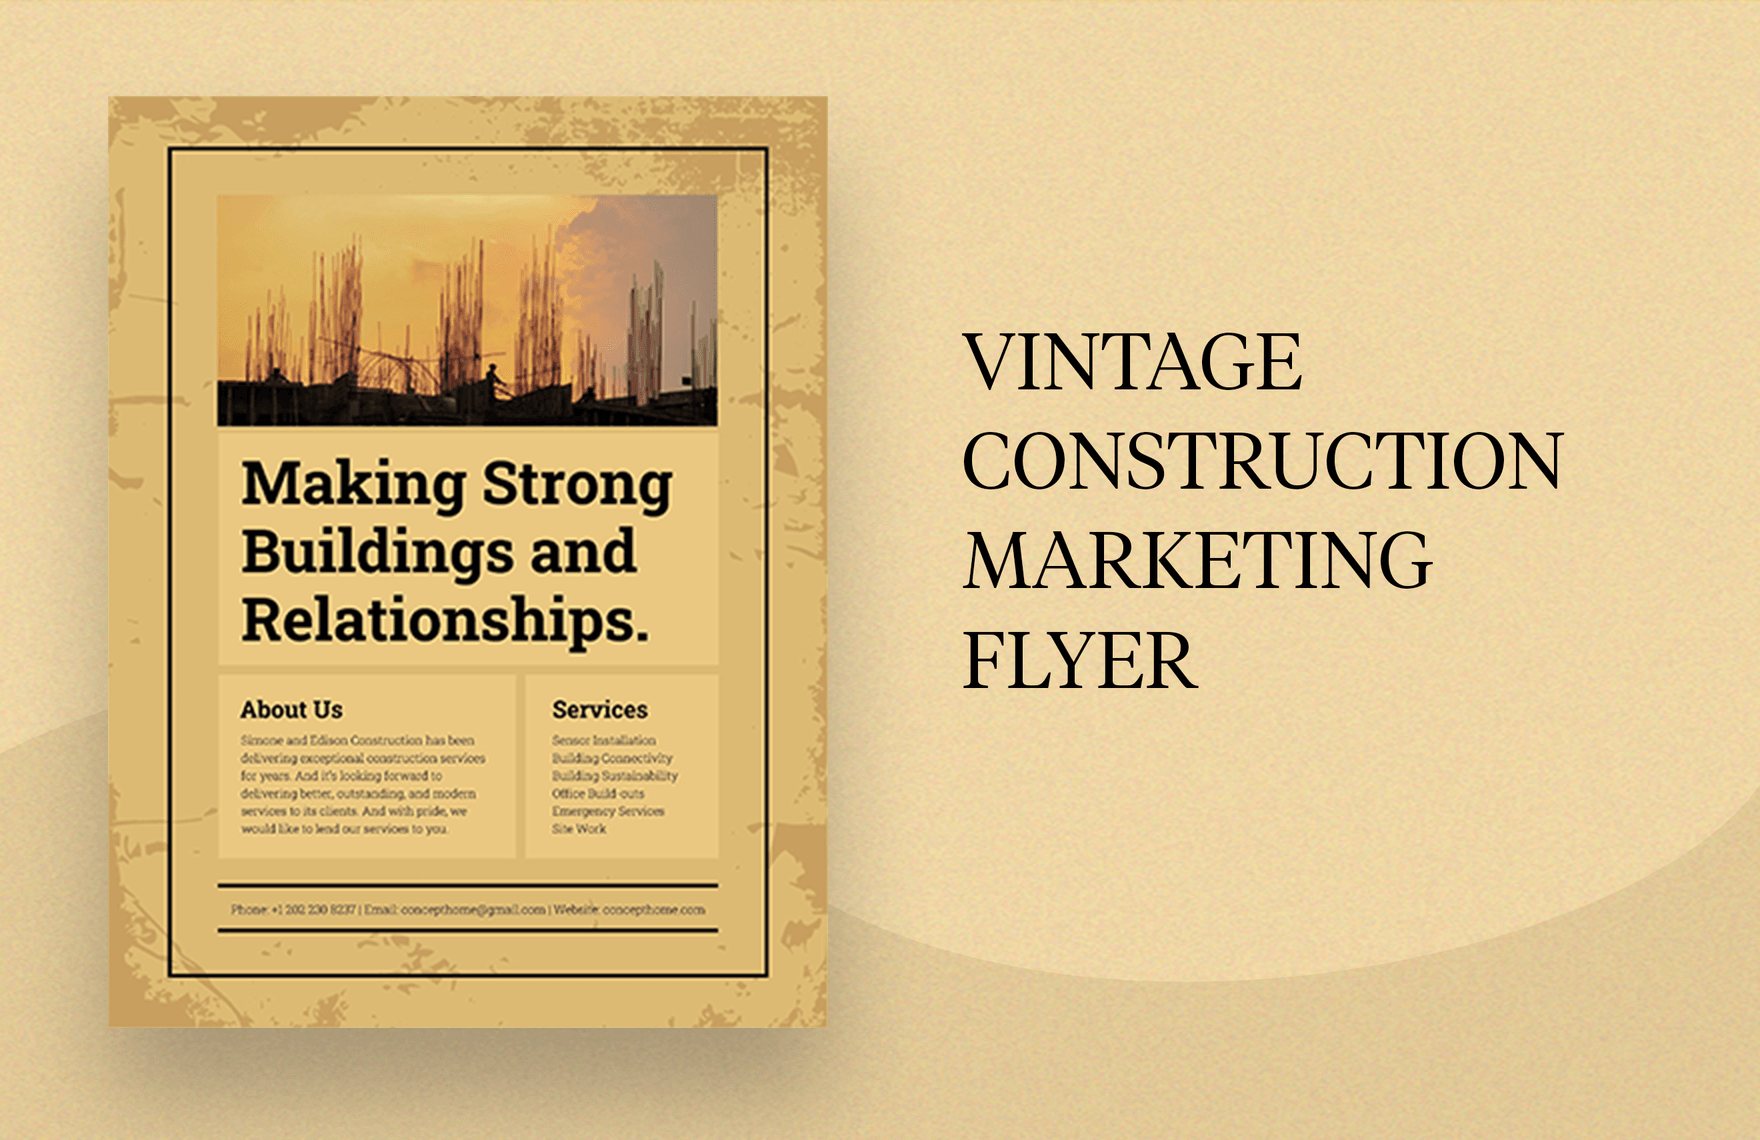 Vintage Construction Marketing Flyer Template in Word, Google Docs, Illustrator, PSD, Apple Pages, InDesign